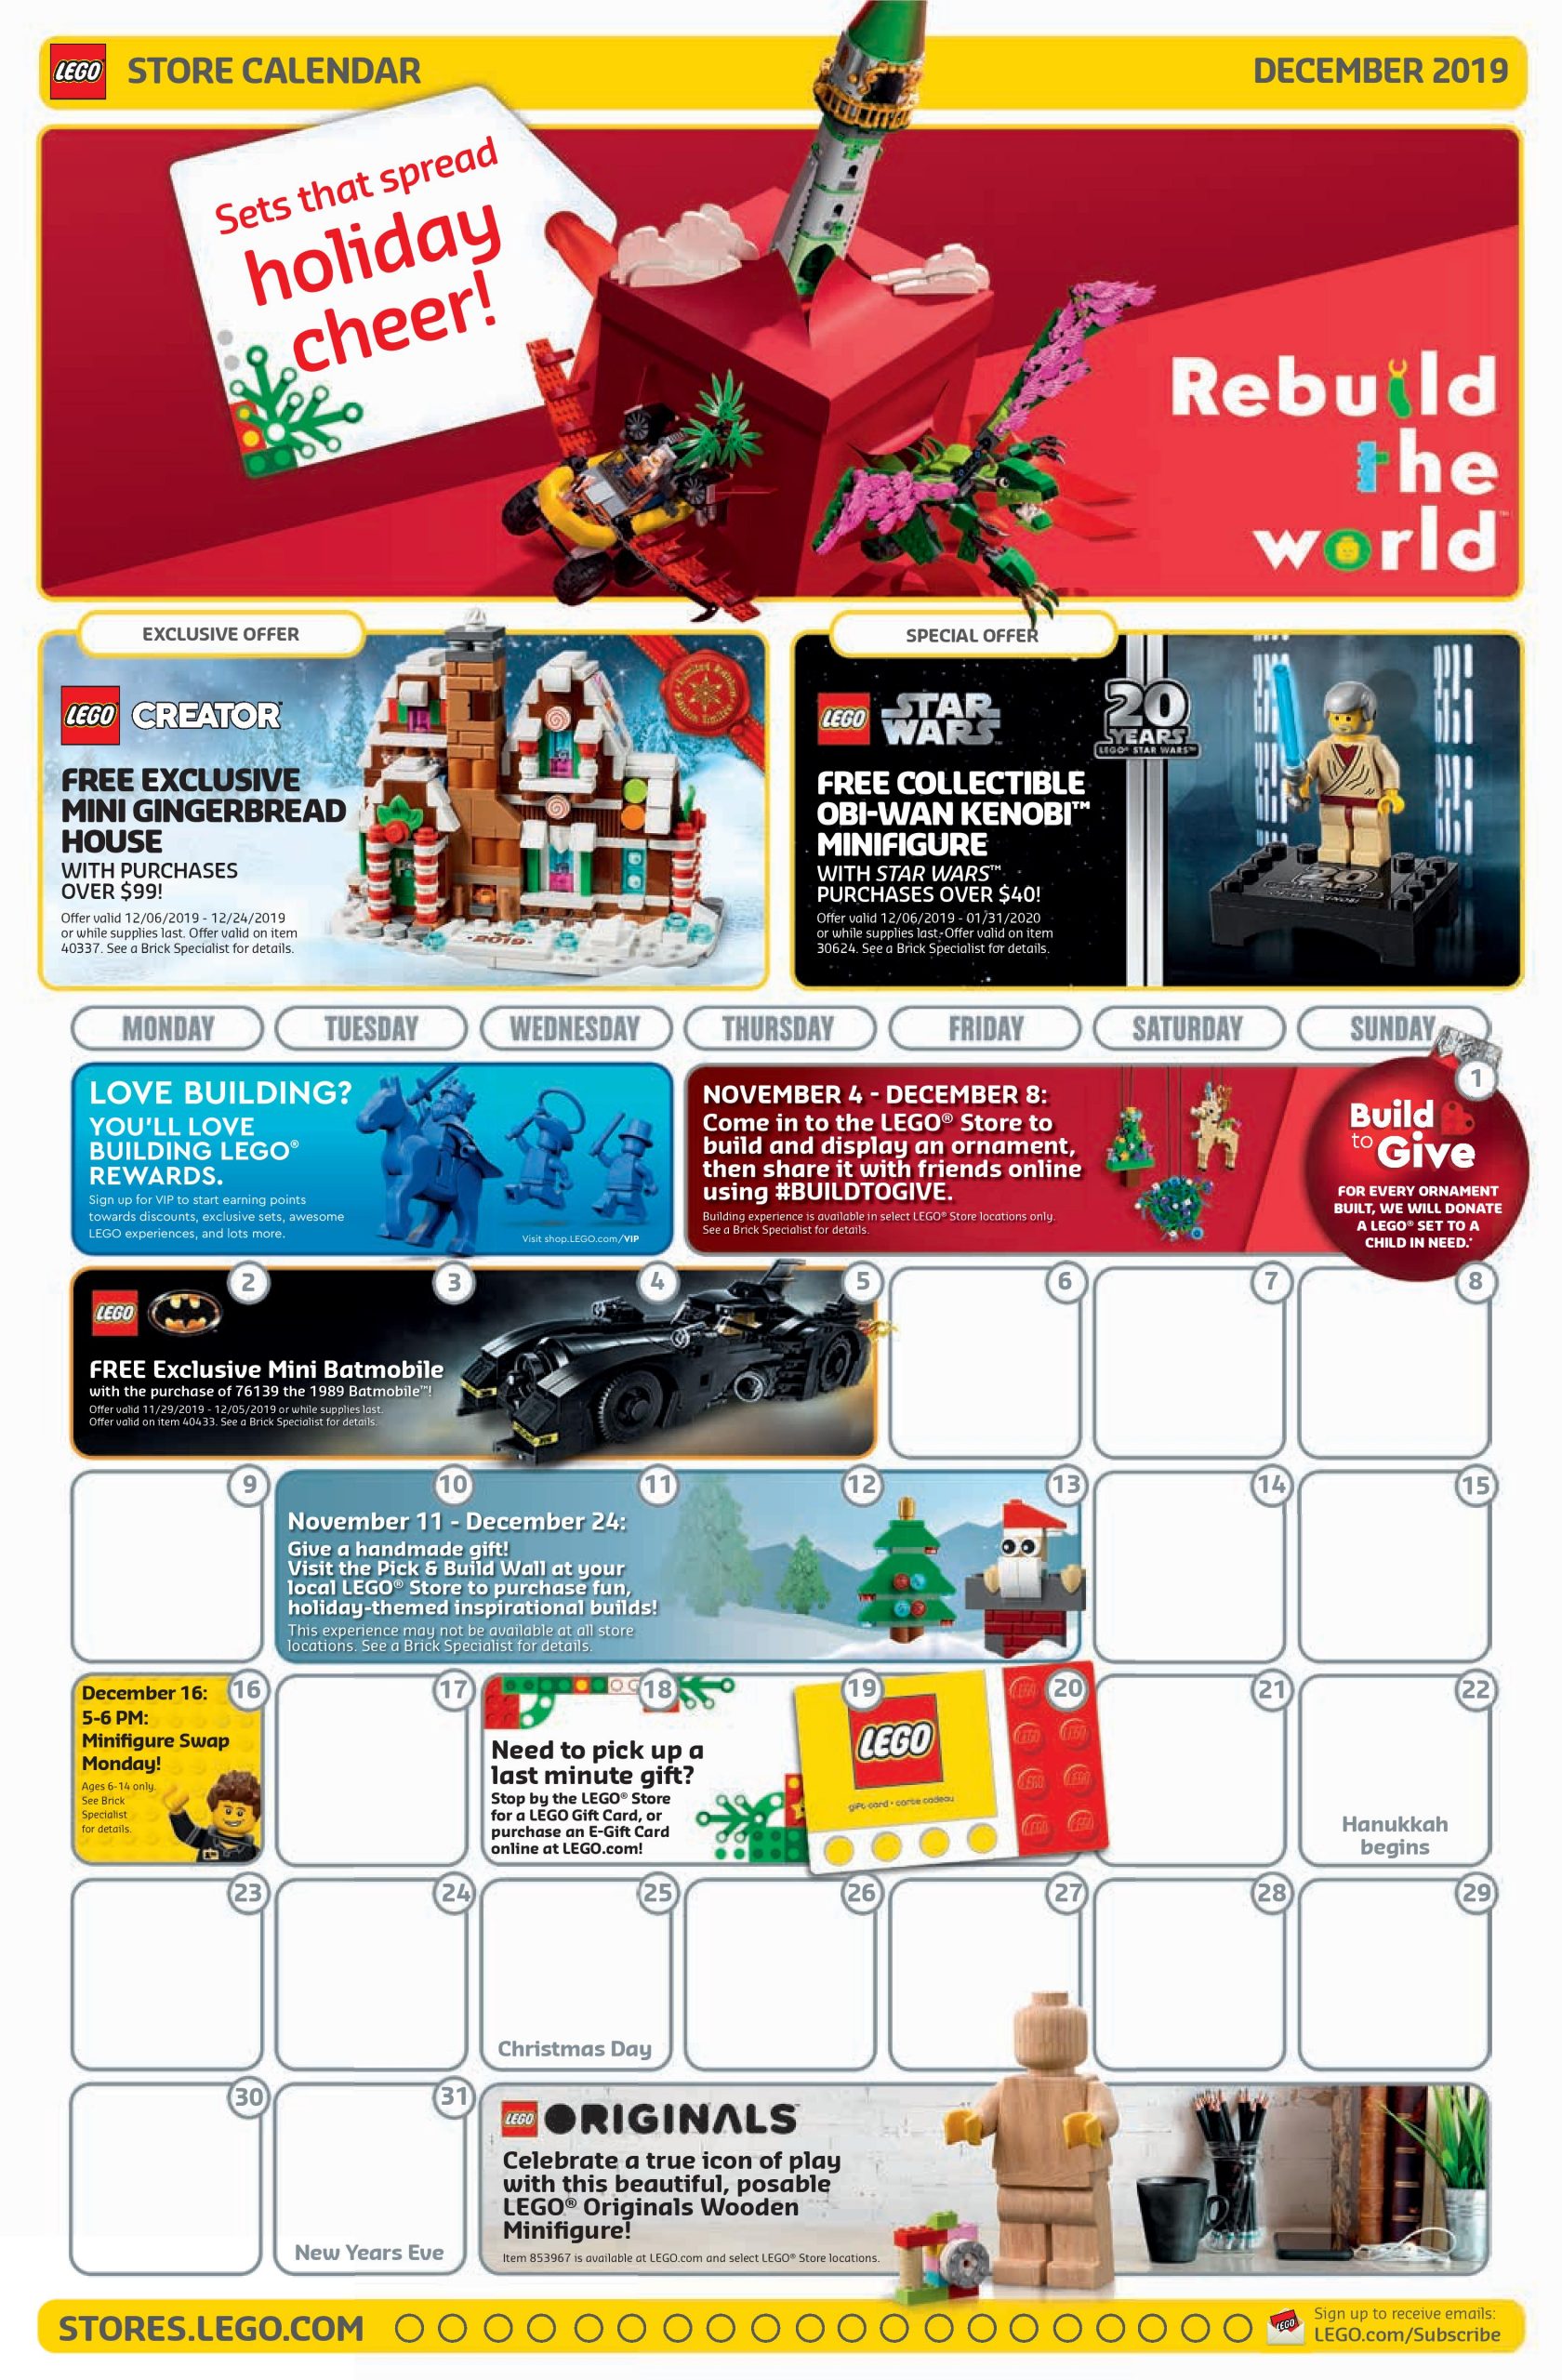 lego store december 2018 calendar